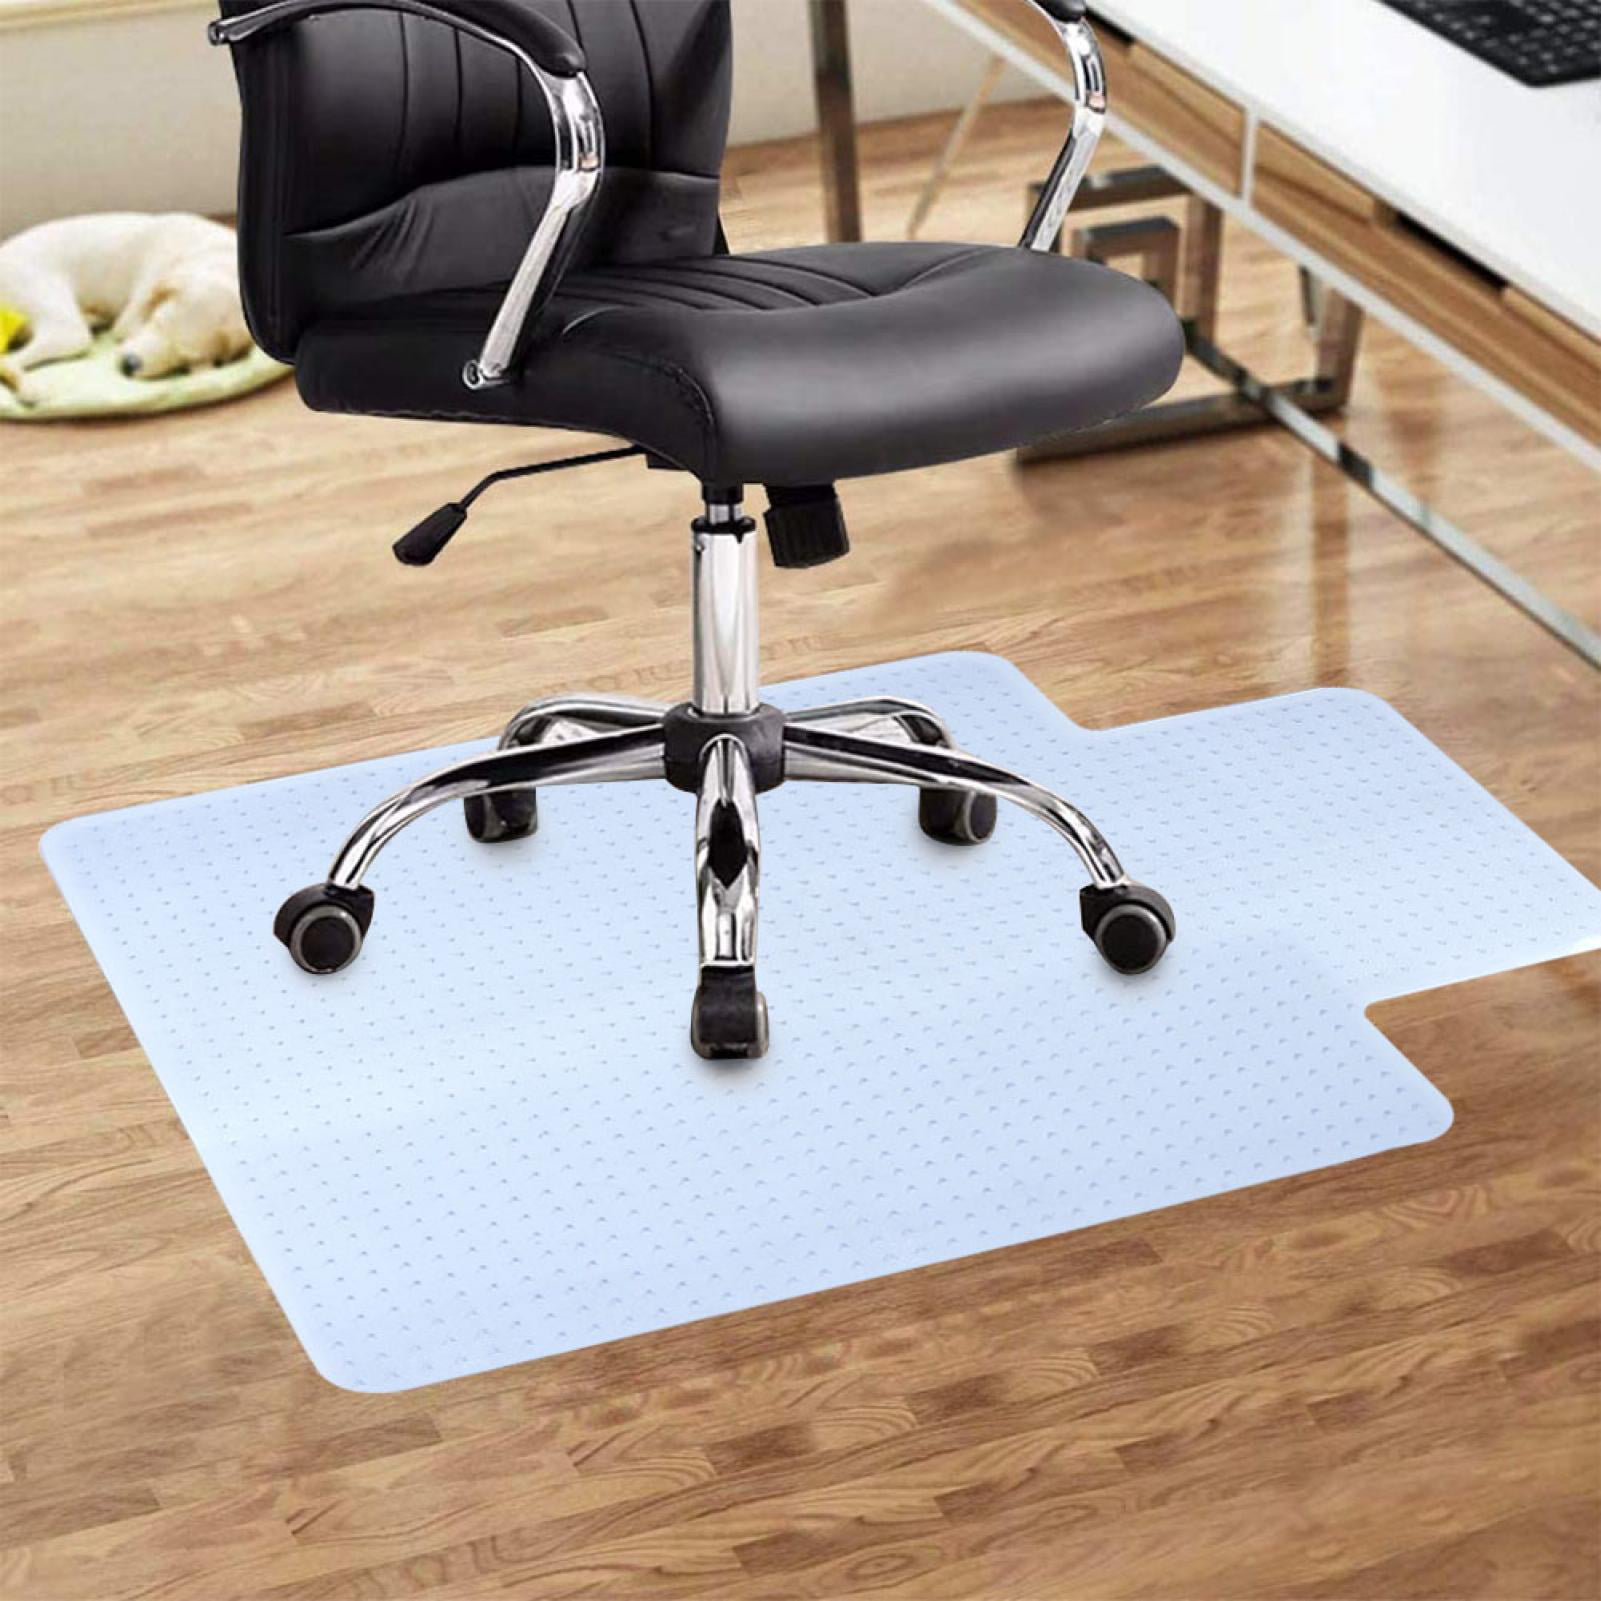 Floor Mat Office Carpet Non Slip Wear Resistant Rolling Chair Rectangle Transparent Moistureproof PVC Protector Anti Scratch Computer Desk Home